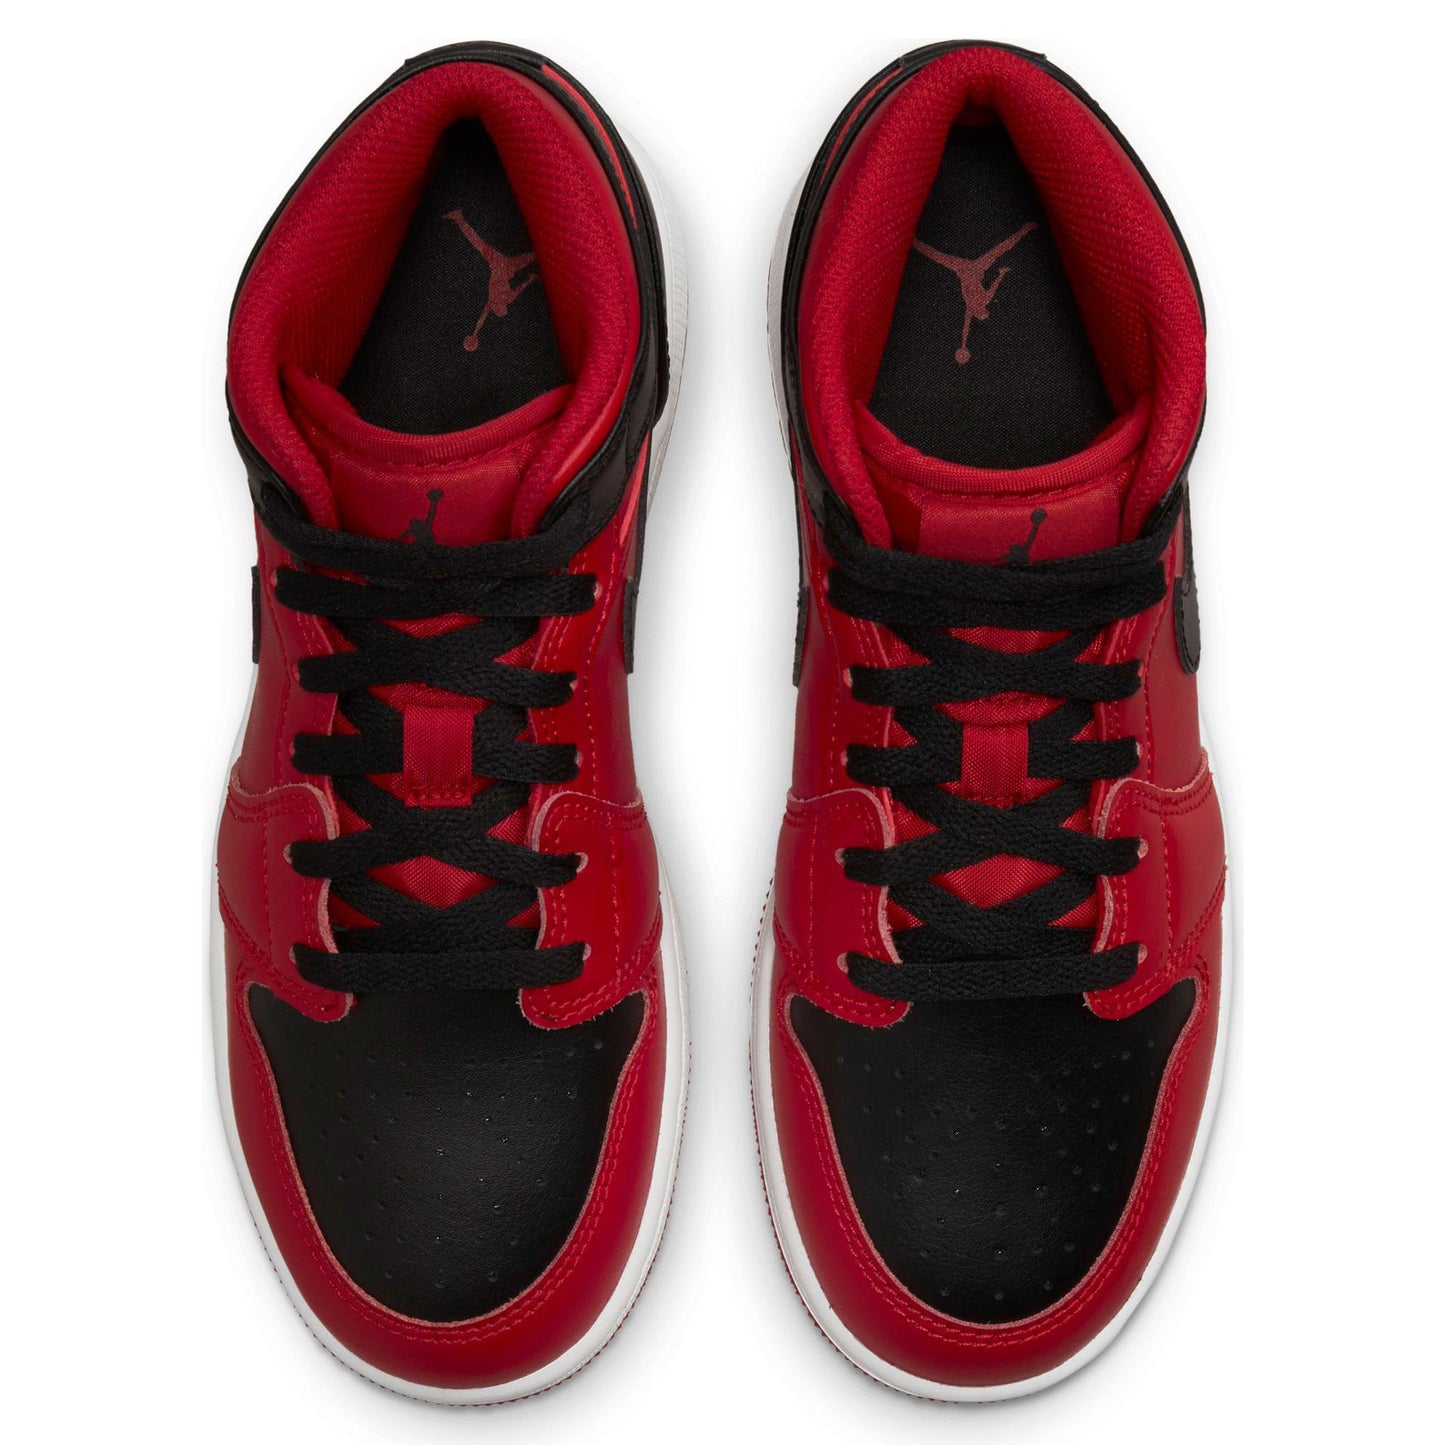 Air Jordan 1 Mid Grade School "Reverse Bred" Gym Red/Black-White 554725-660